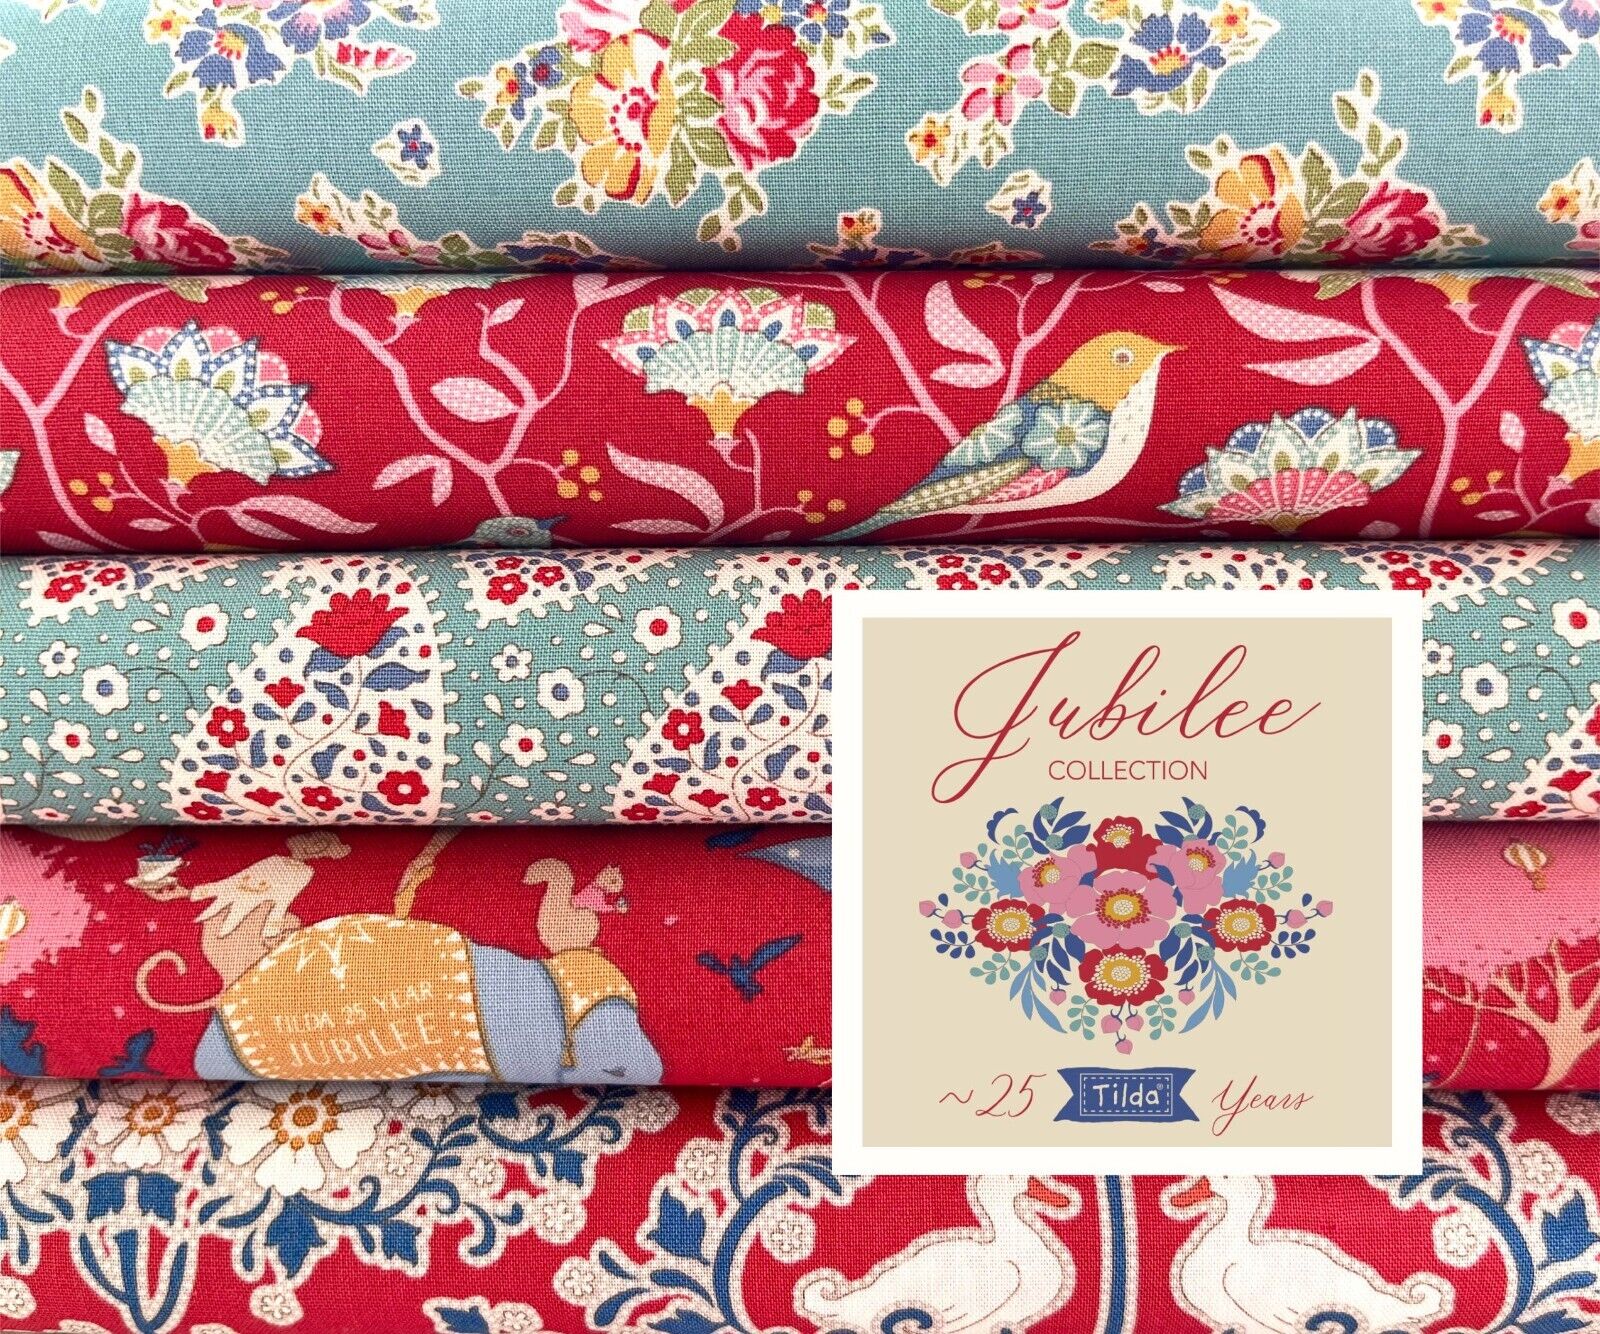 Stoffpaket Tilda Jubilee teal red 5 x 25cm x 110cm Nähen Patchwork Quilten